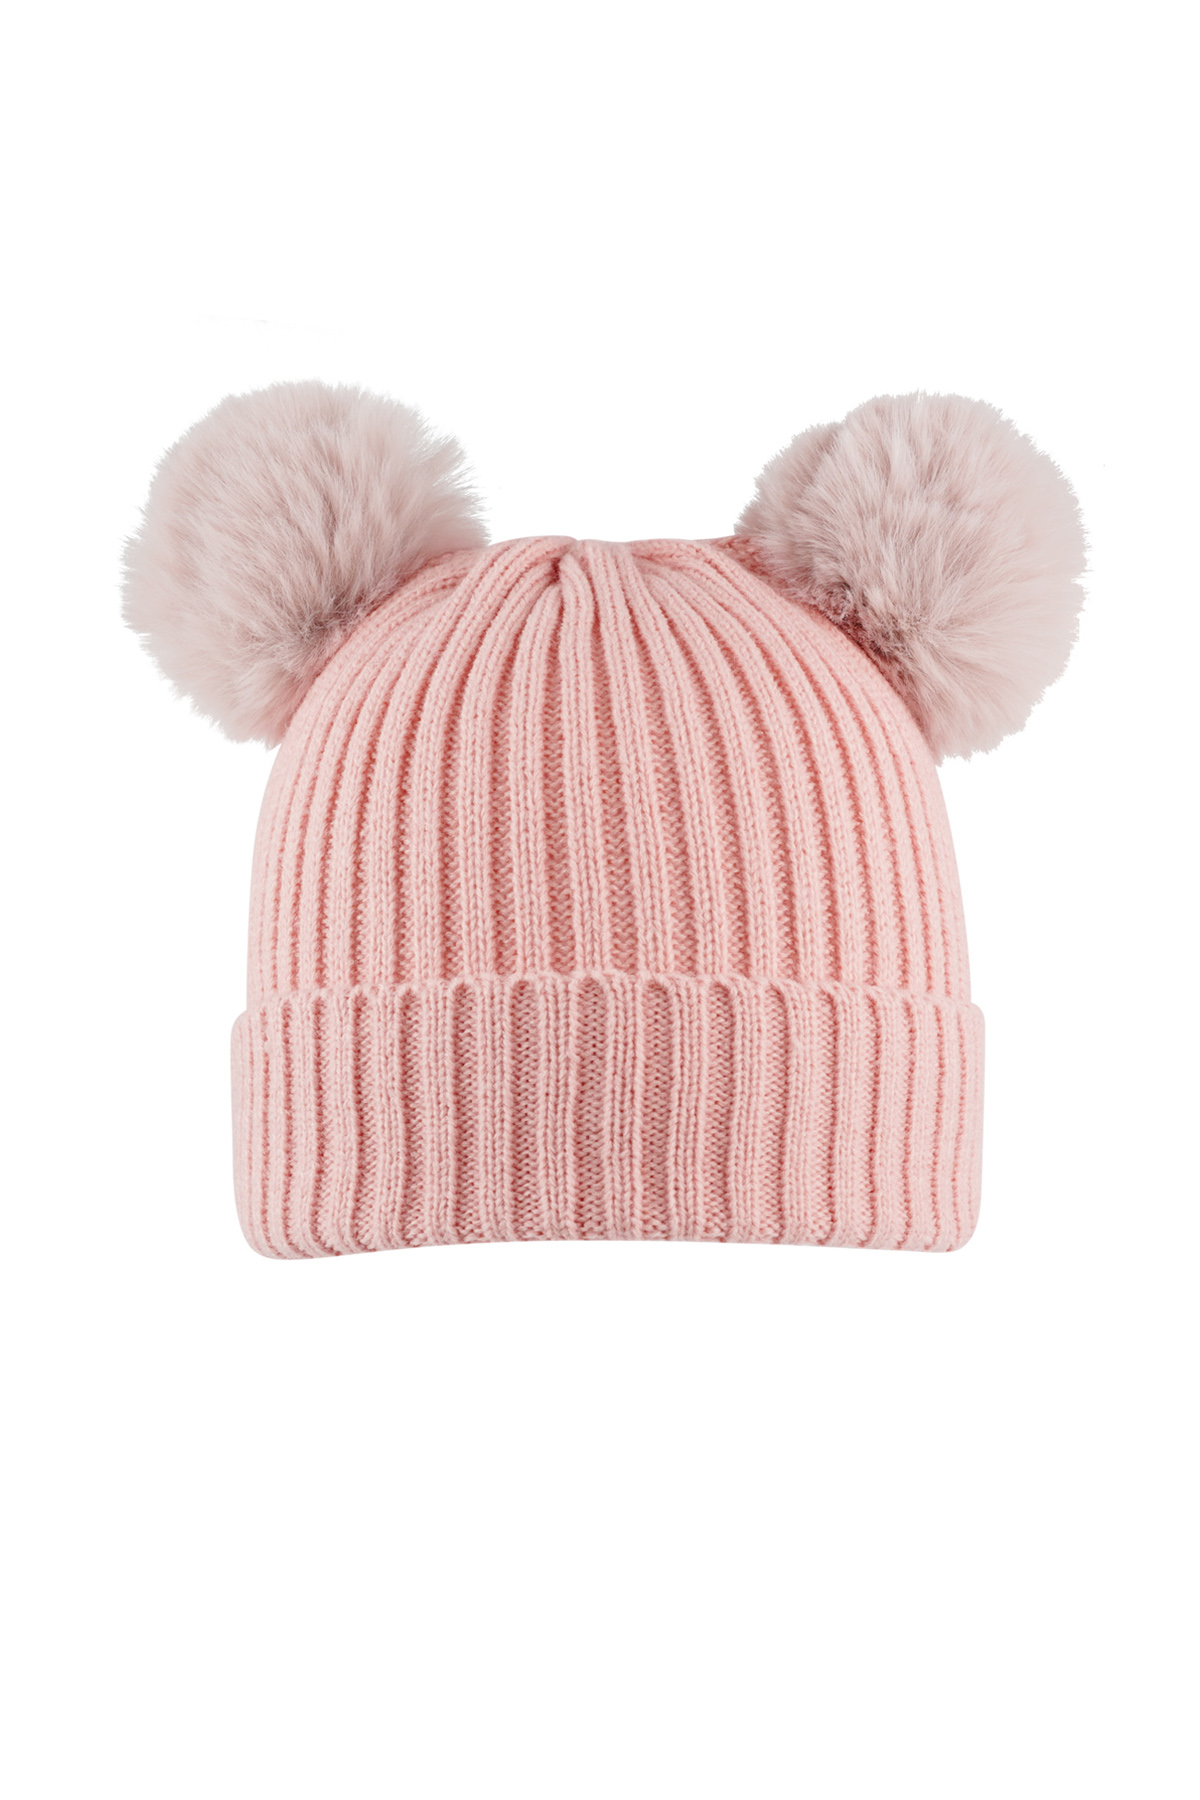 Kids - basic hat with pink balls